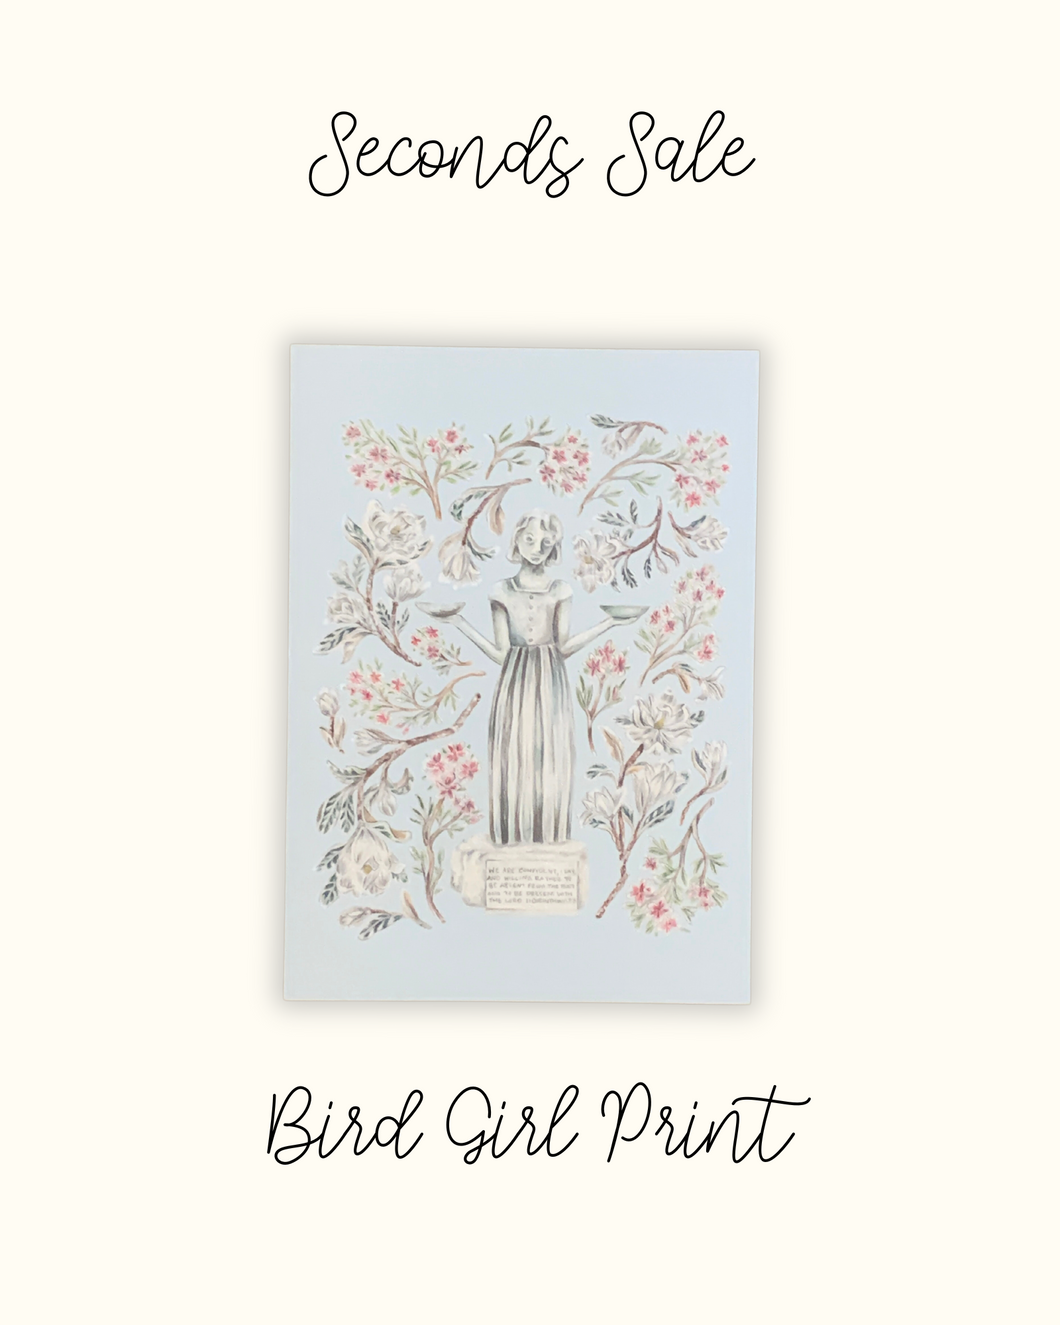 Bird Girl 5x7 print - Seconds Sale